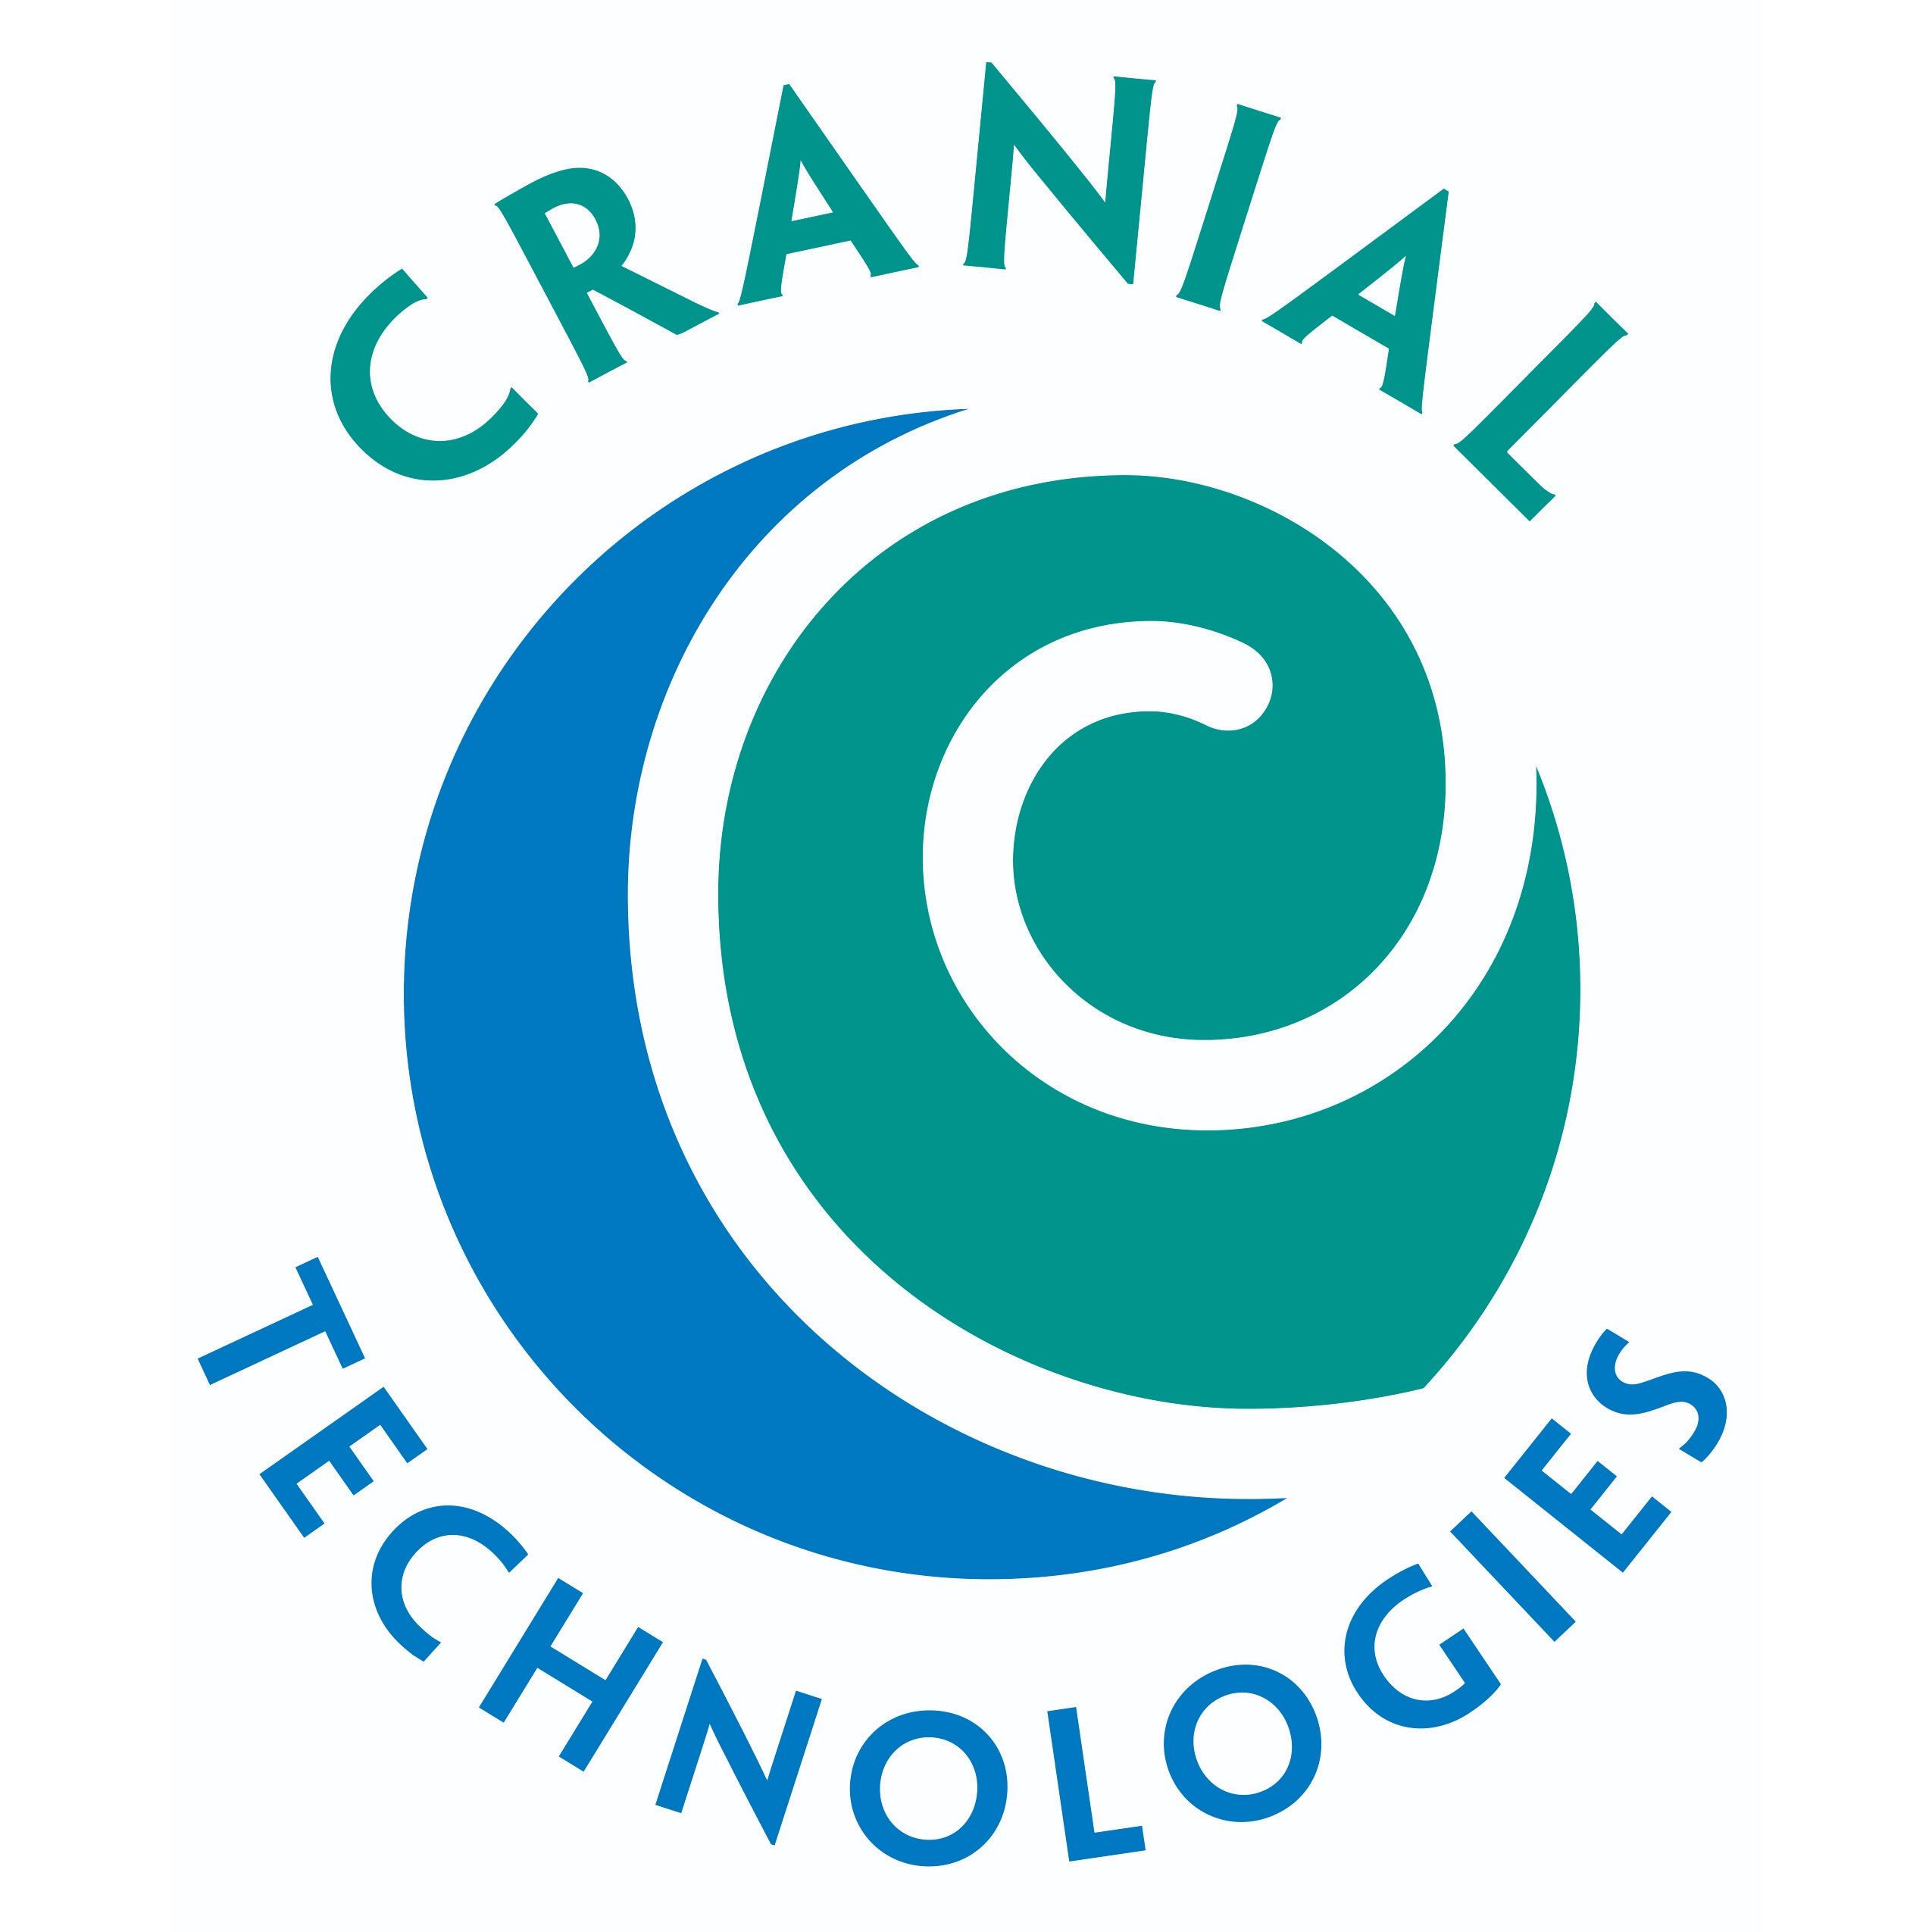 Cranial Technologies Logo